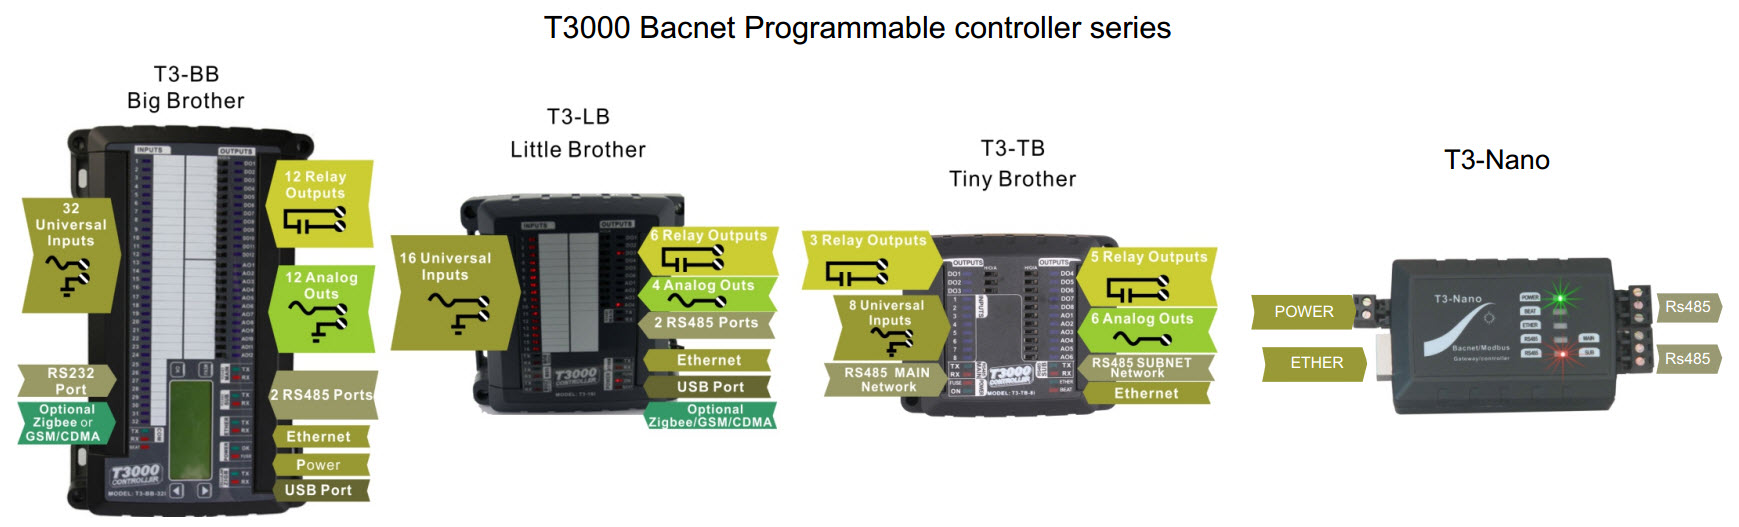 Bacnet Programmable Controller - Bravo Controls